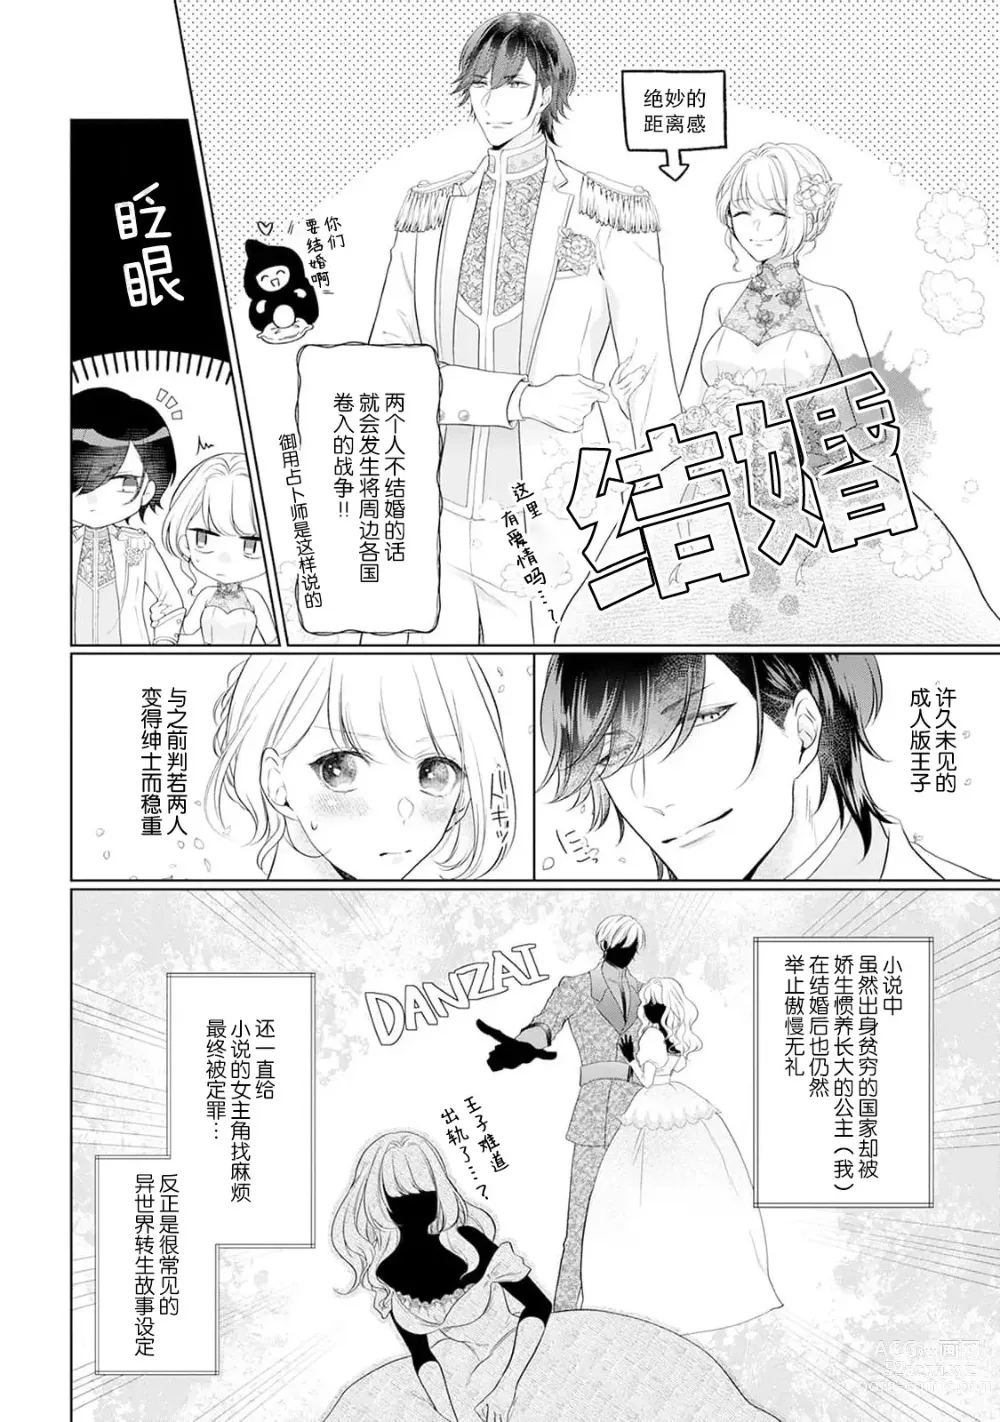 Page 6 of manga 虽是恶役公主，却不得不和本应讨厌自己的王子生孩子。 1